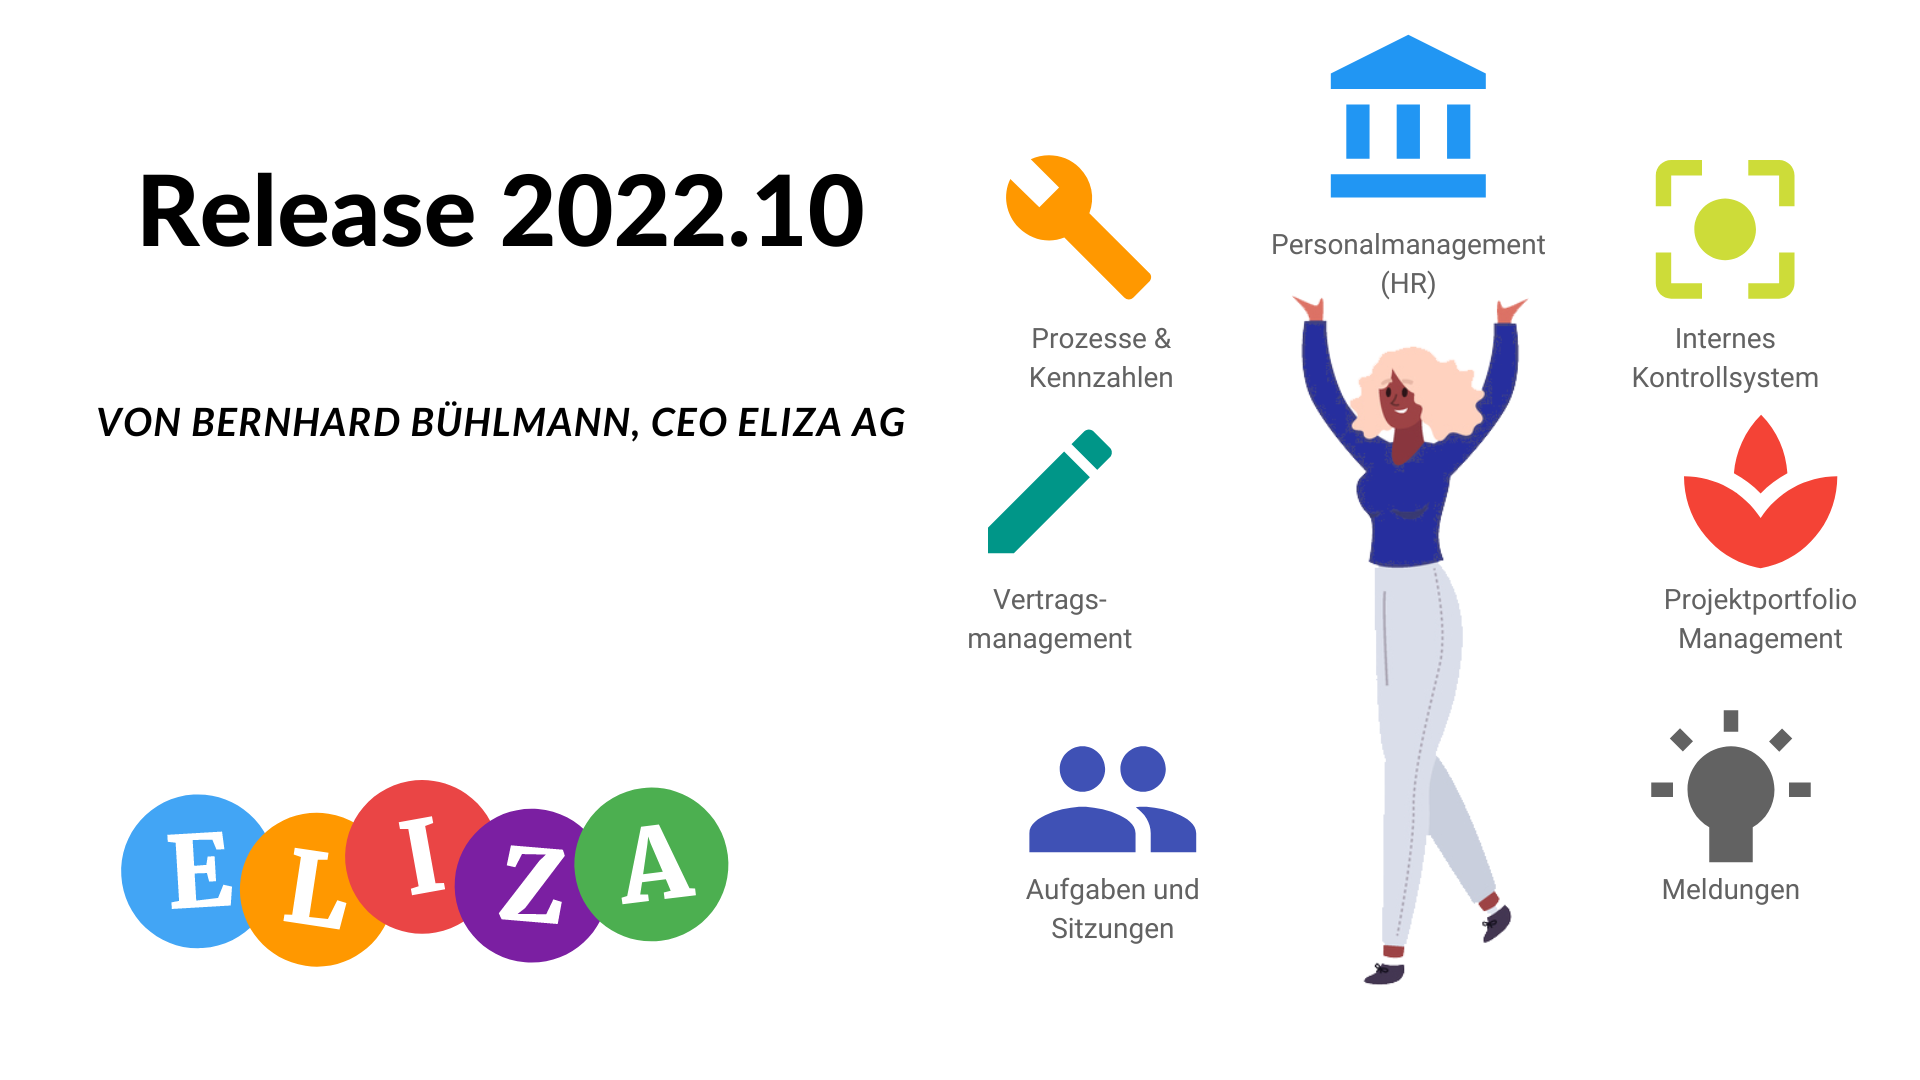 ELIZA Release 2020.10